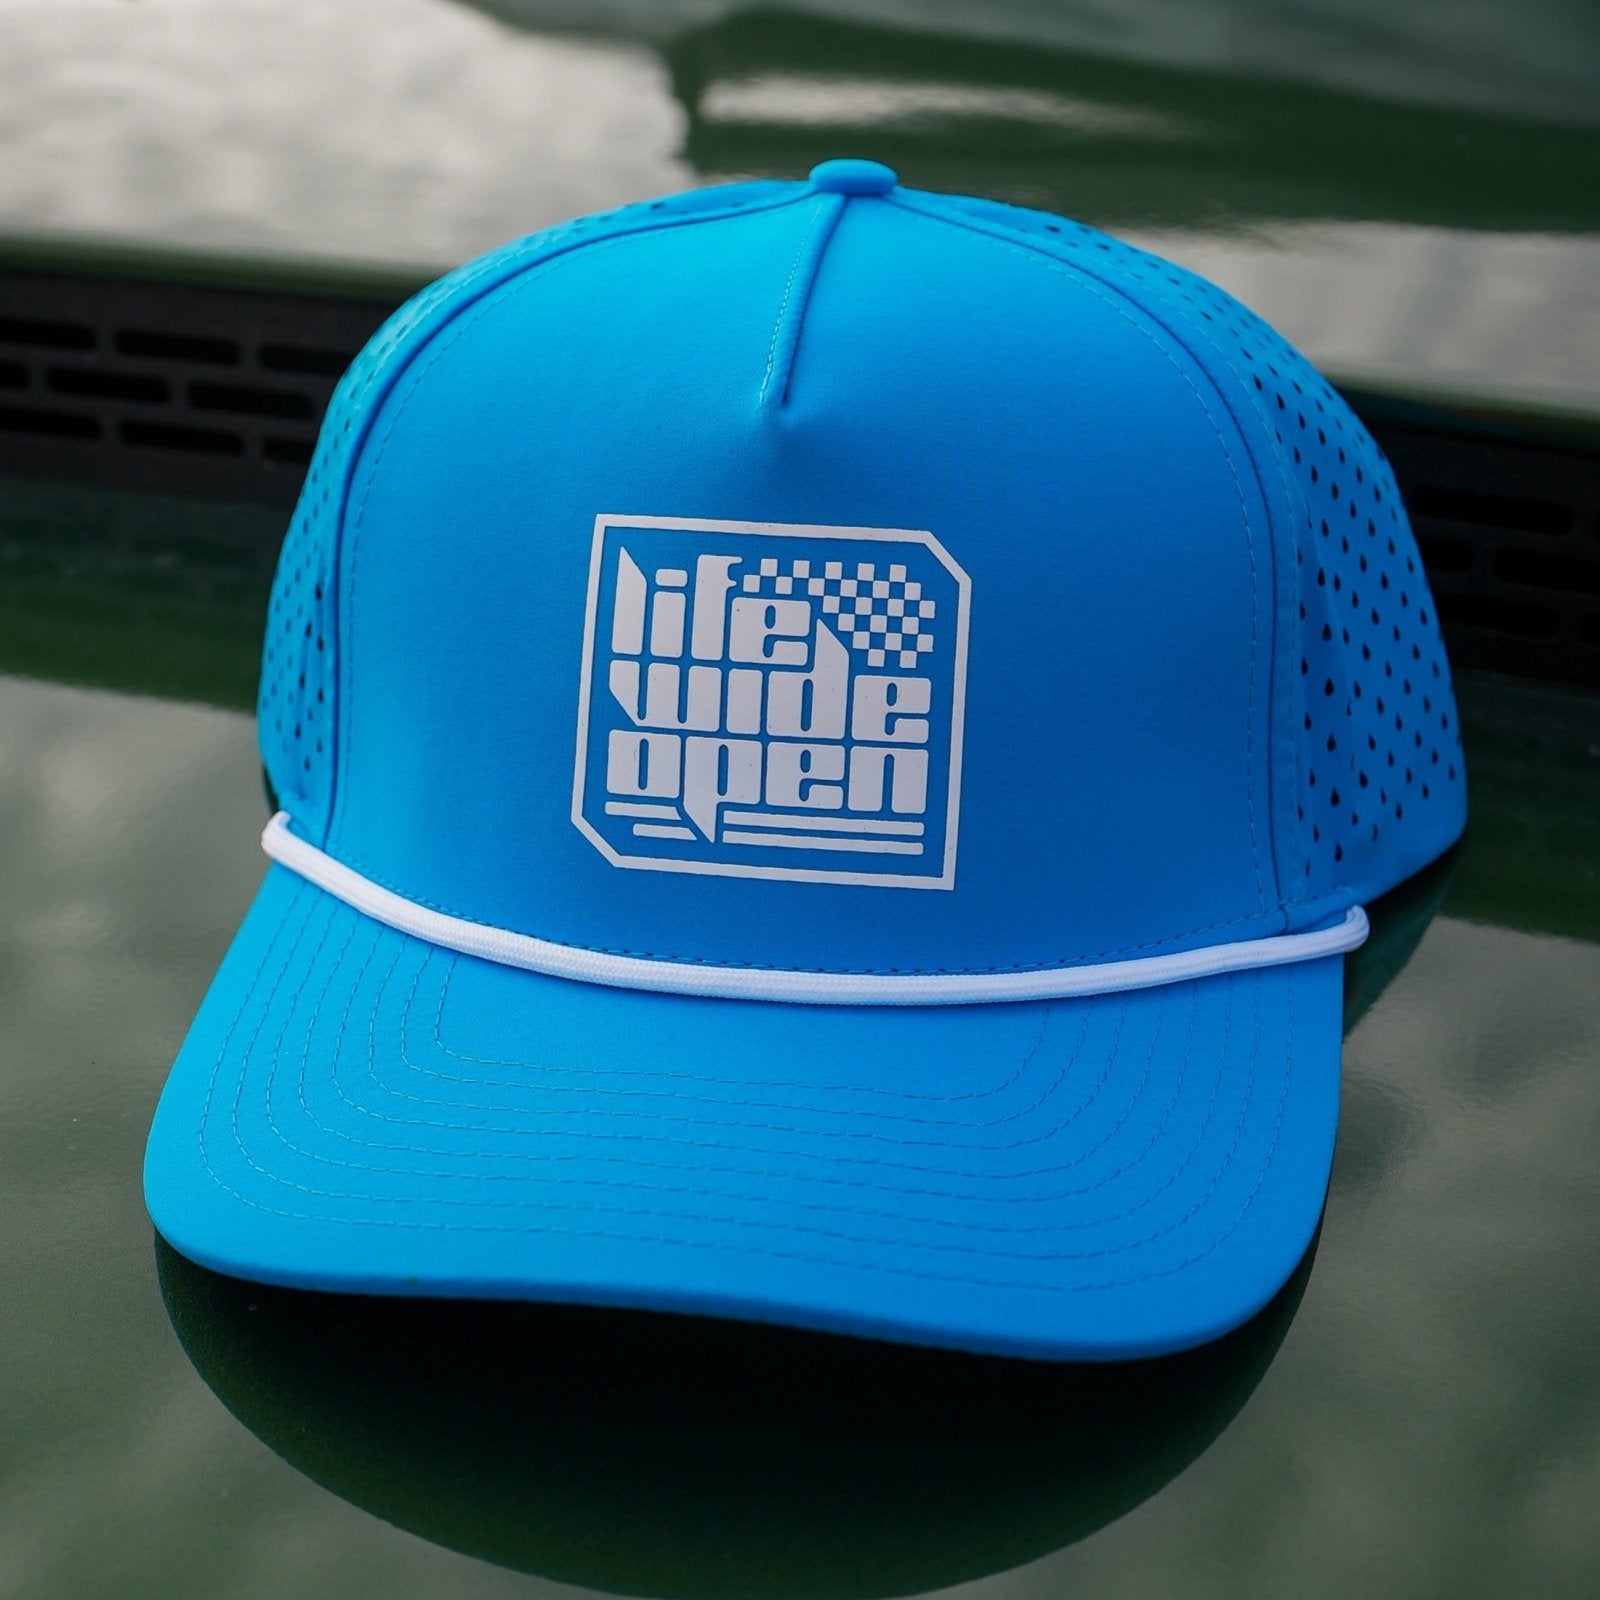 Blue Baja Performance Hat